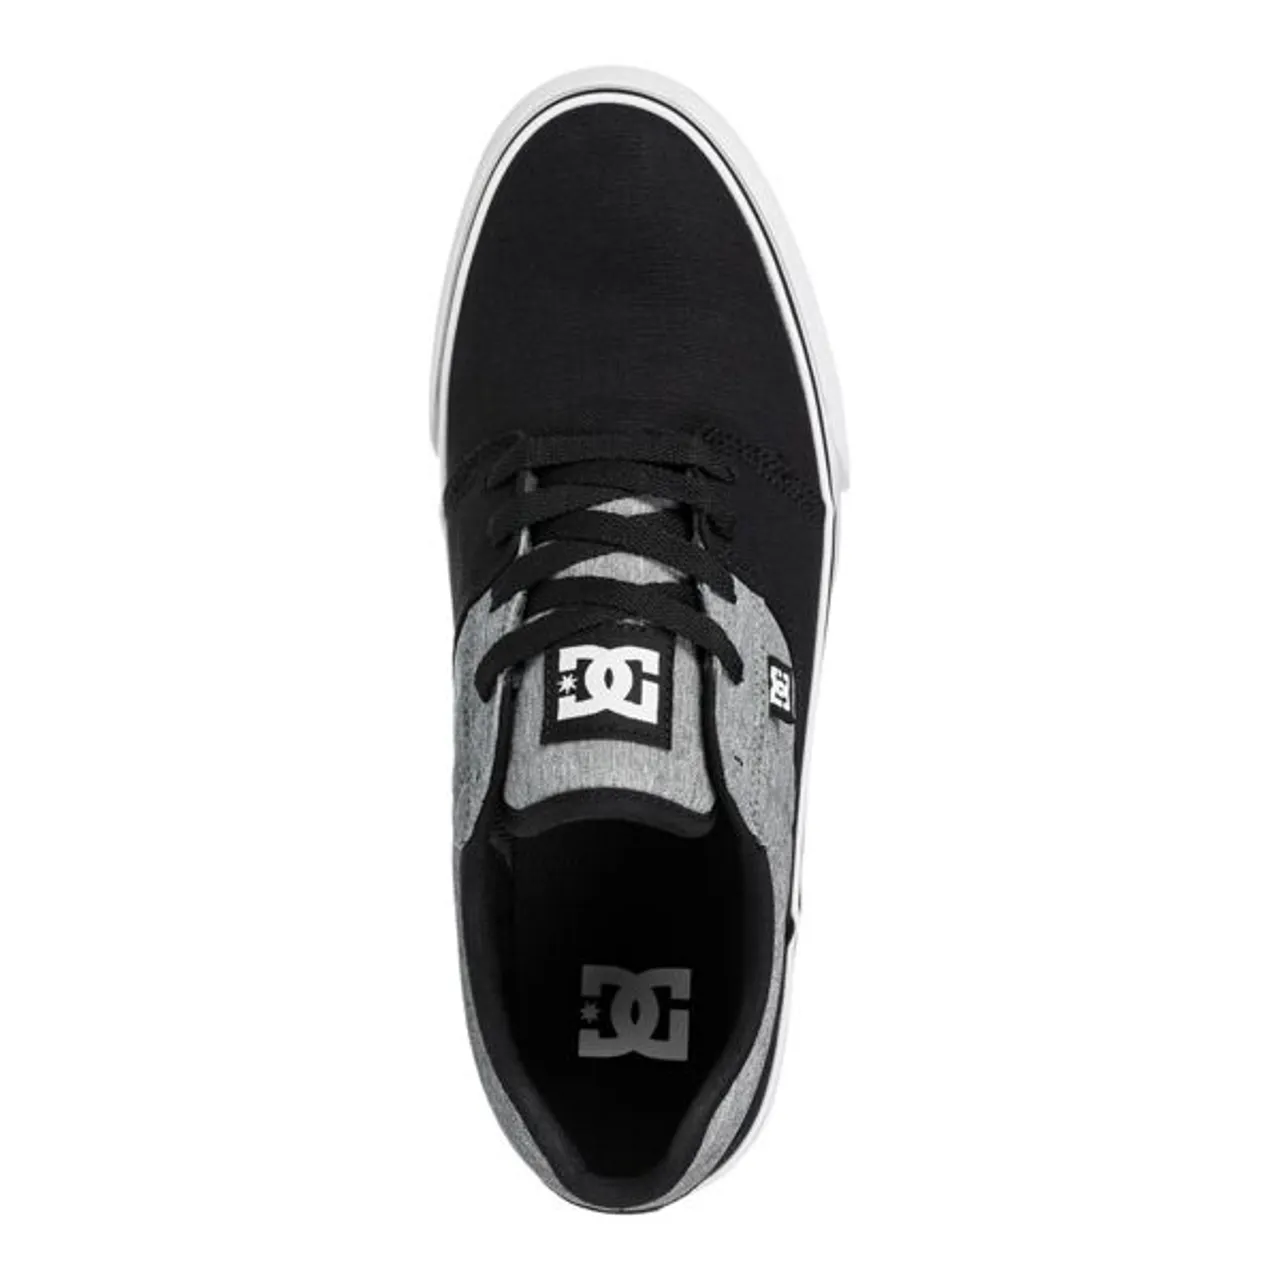 Sneaker DC SHOES "Tonik Tx Se" Gr. 7,5(40), schwarz (battleship, black) Schuhe Sneaker